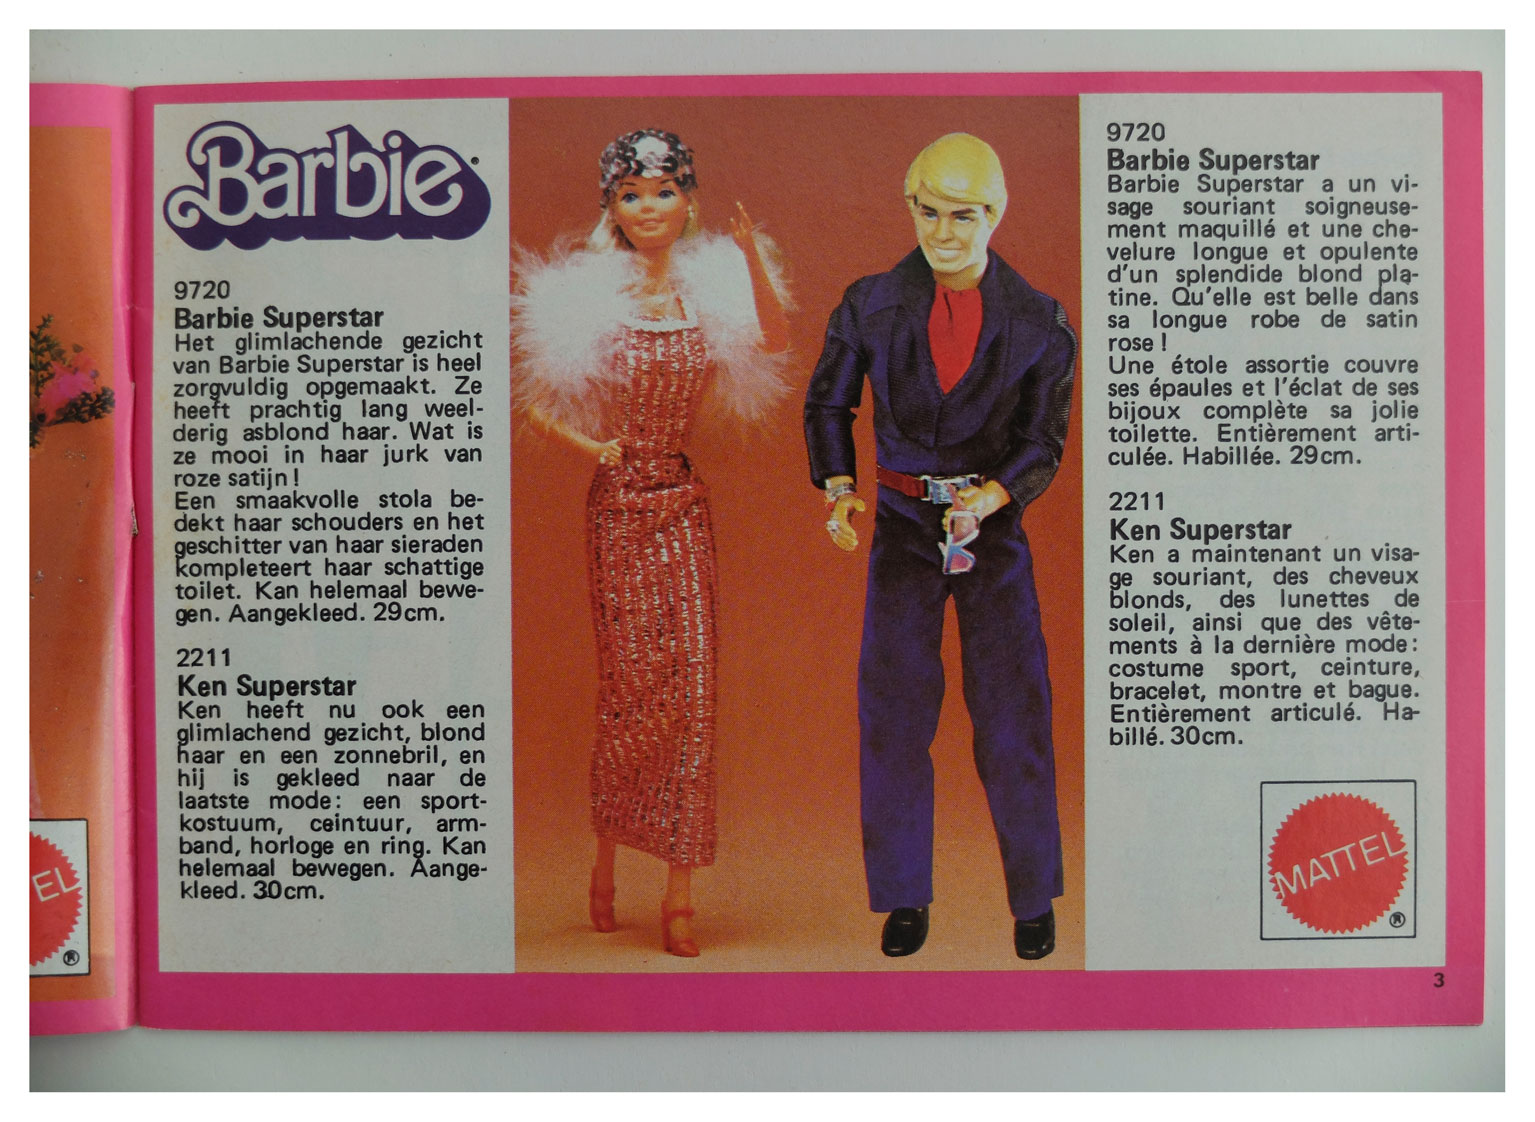 From 1979 Belgian Barbie booklet